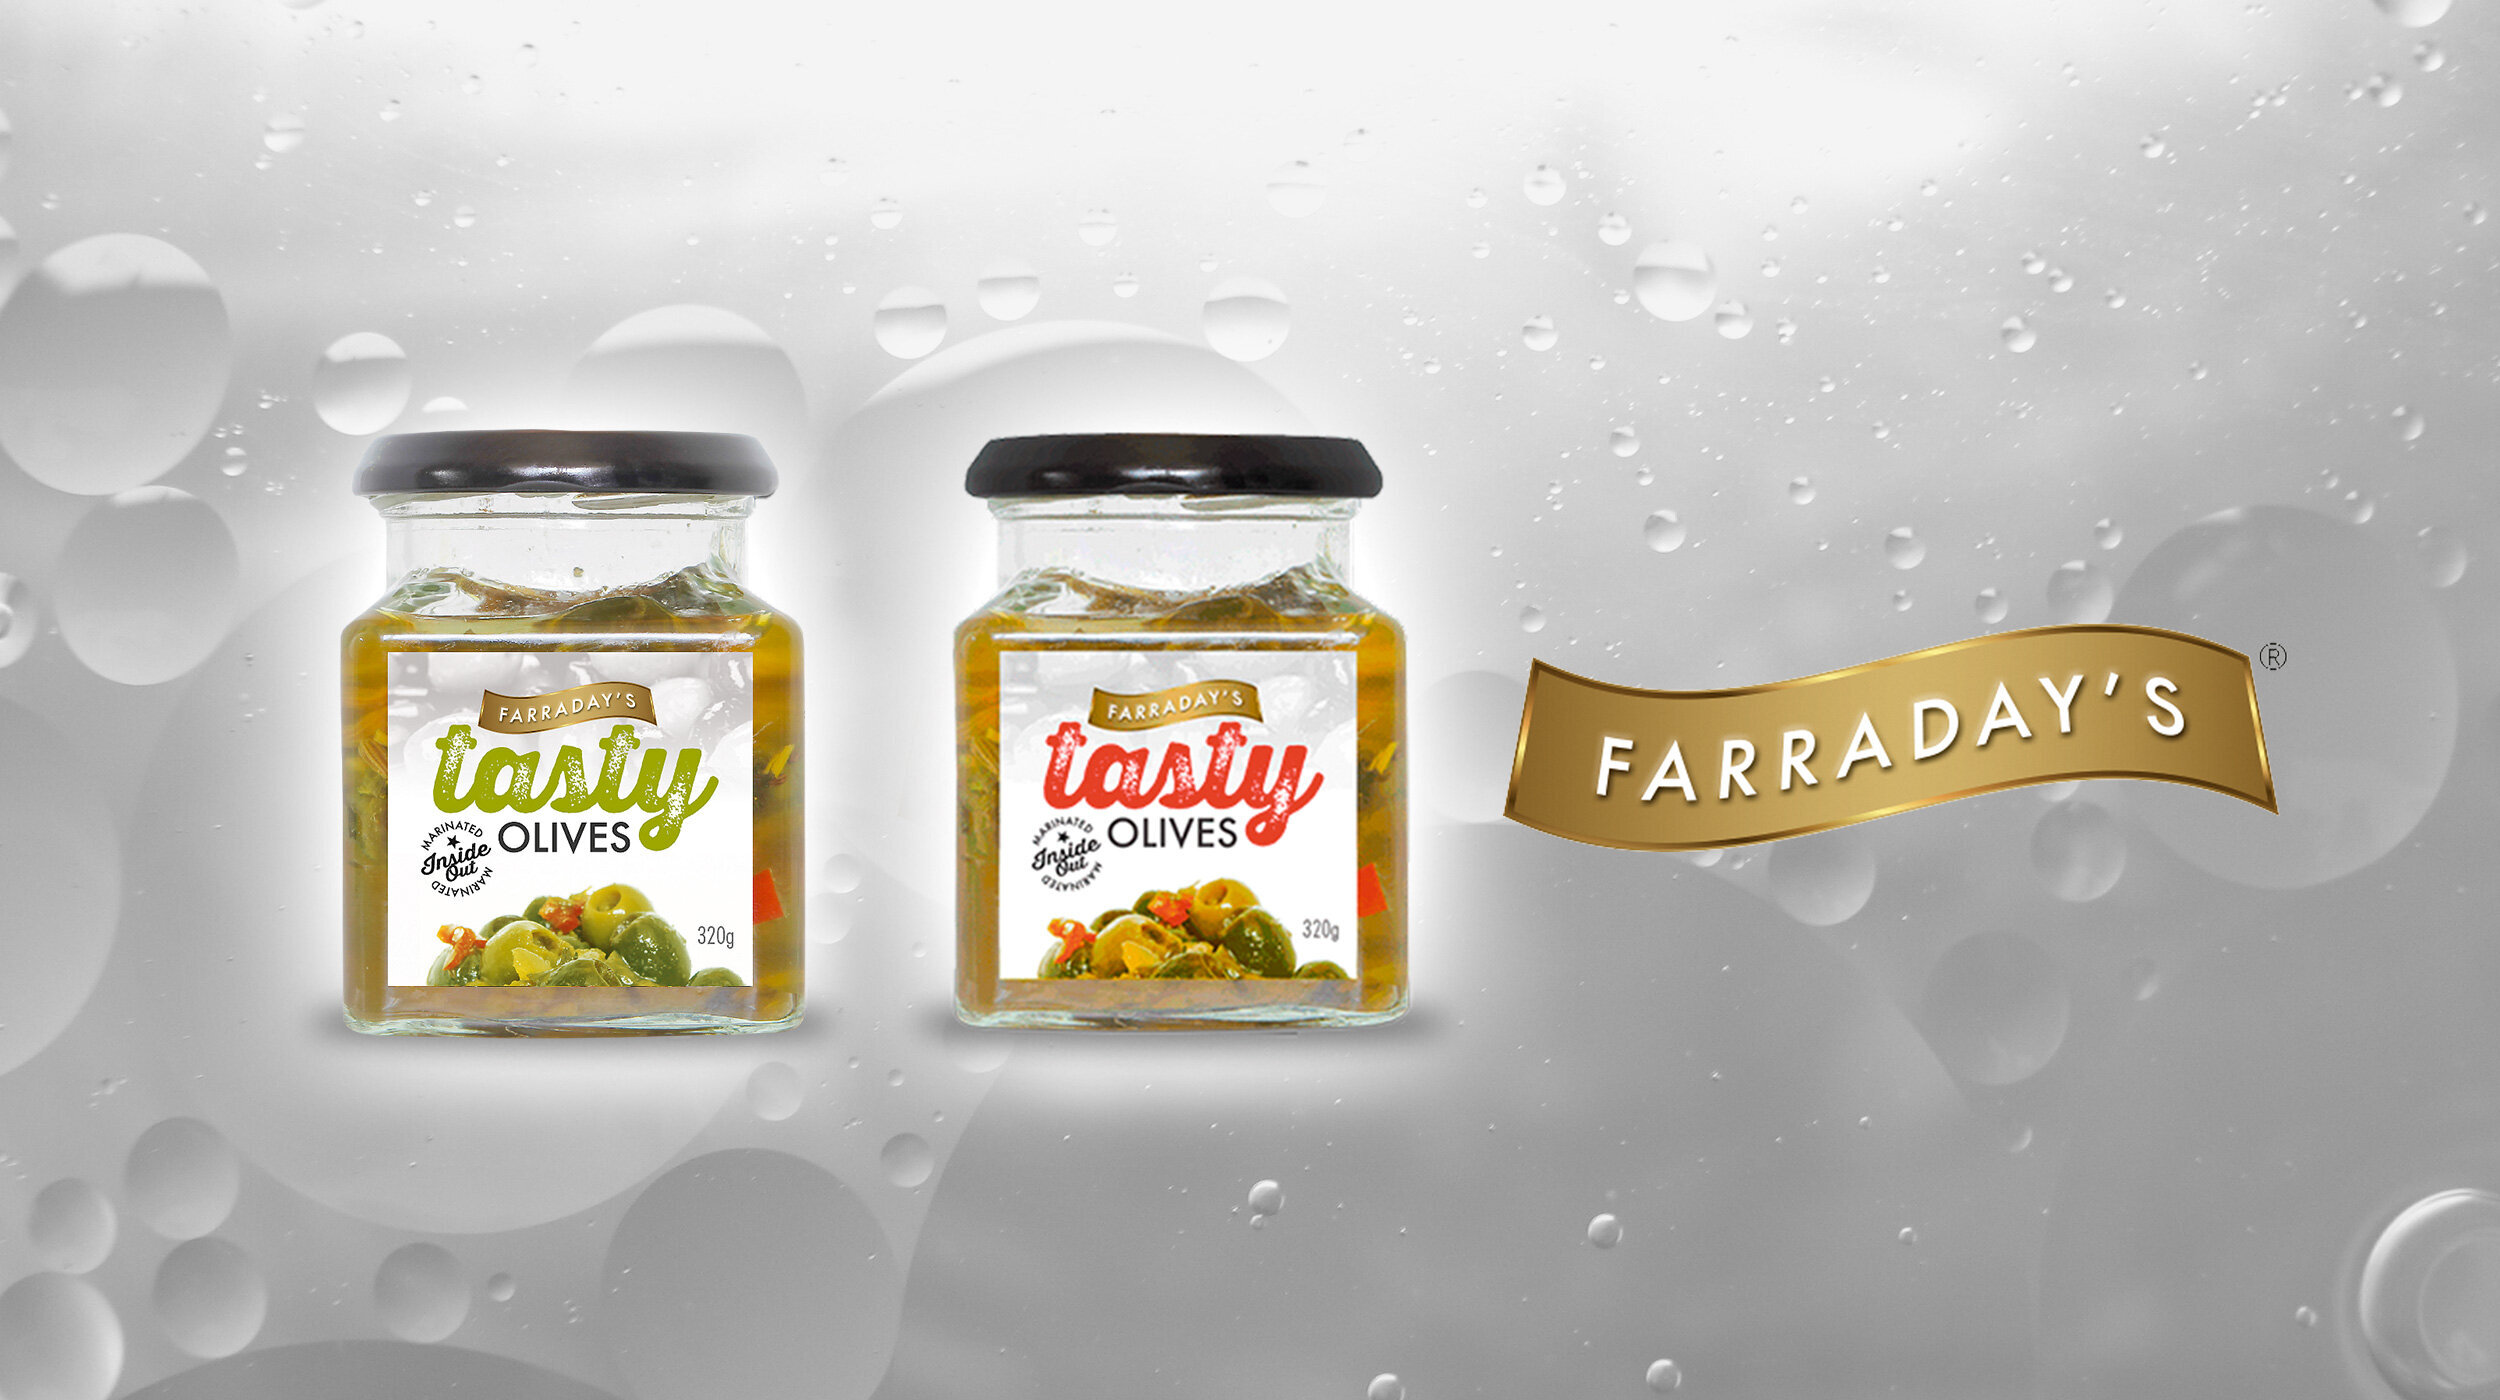 brand-food-packaging-design-farradays-tasty-adam-thorp-6.jpeg